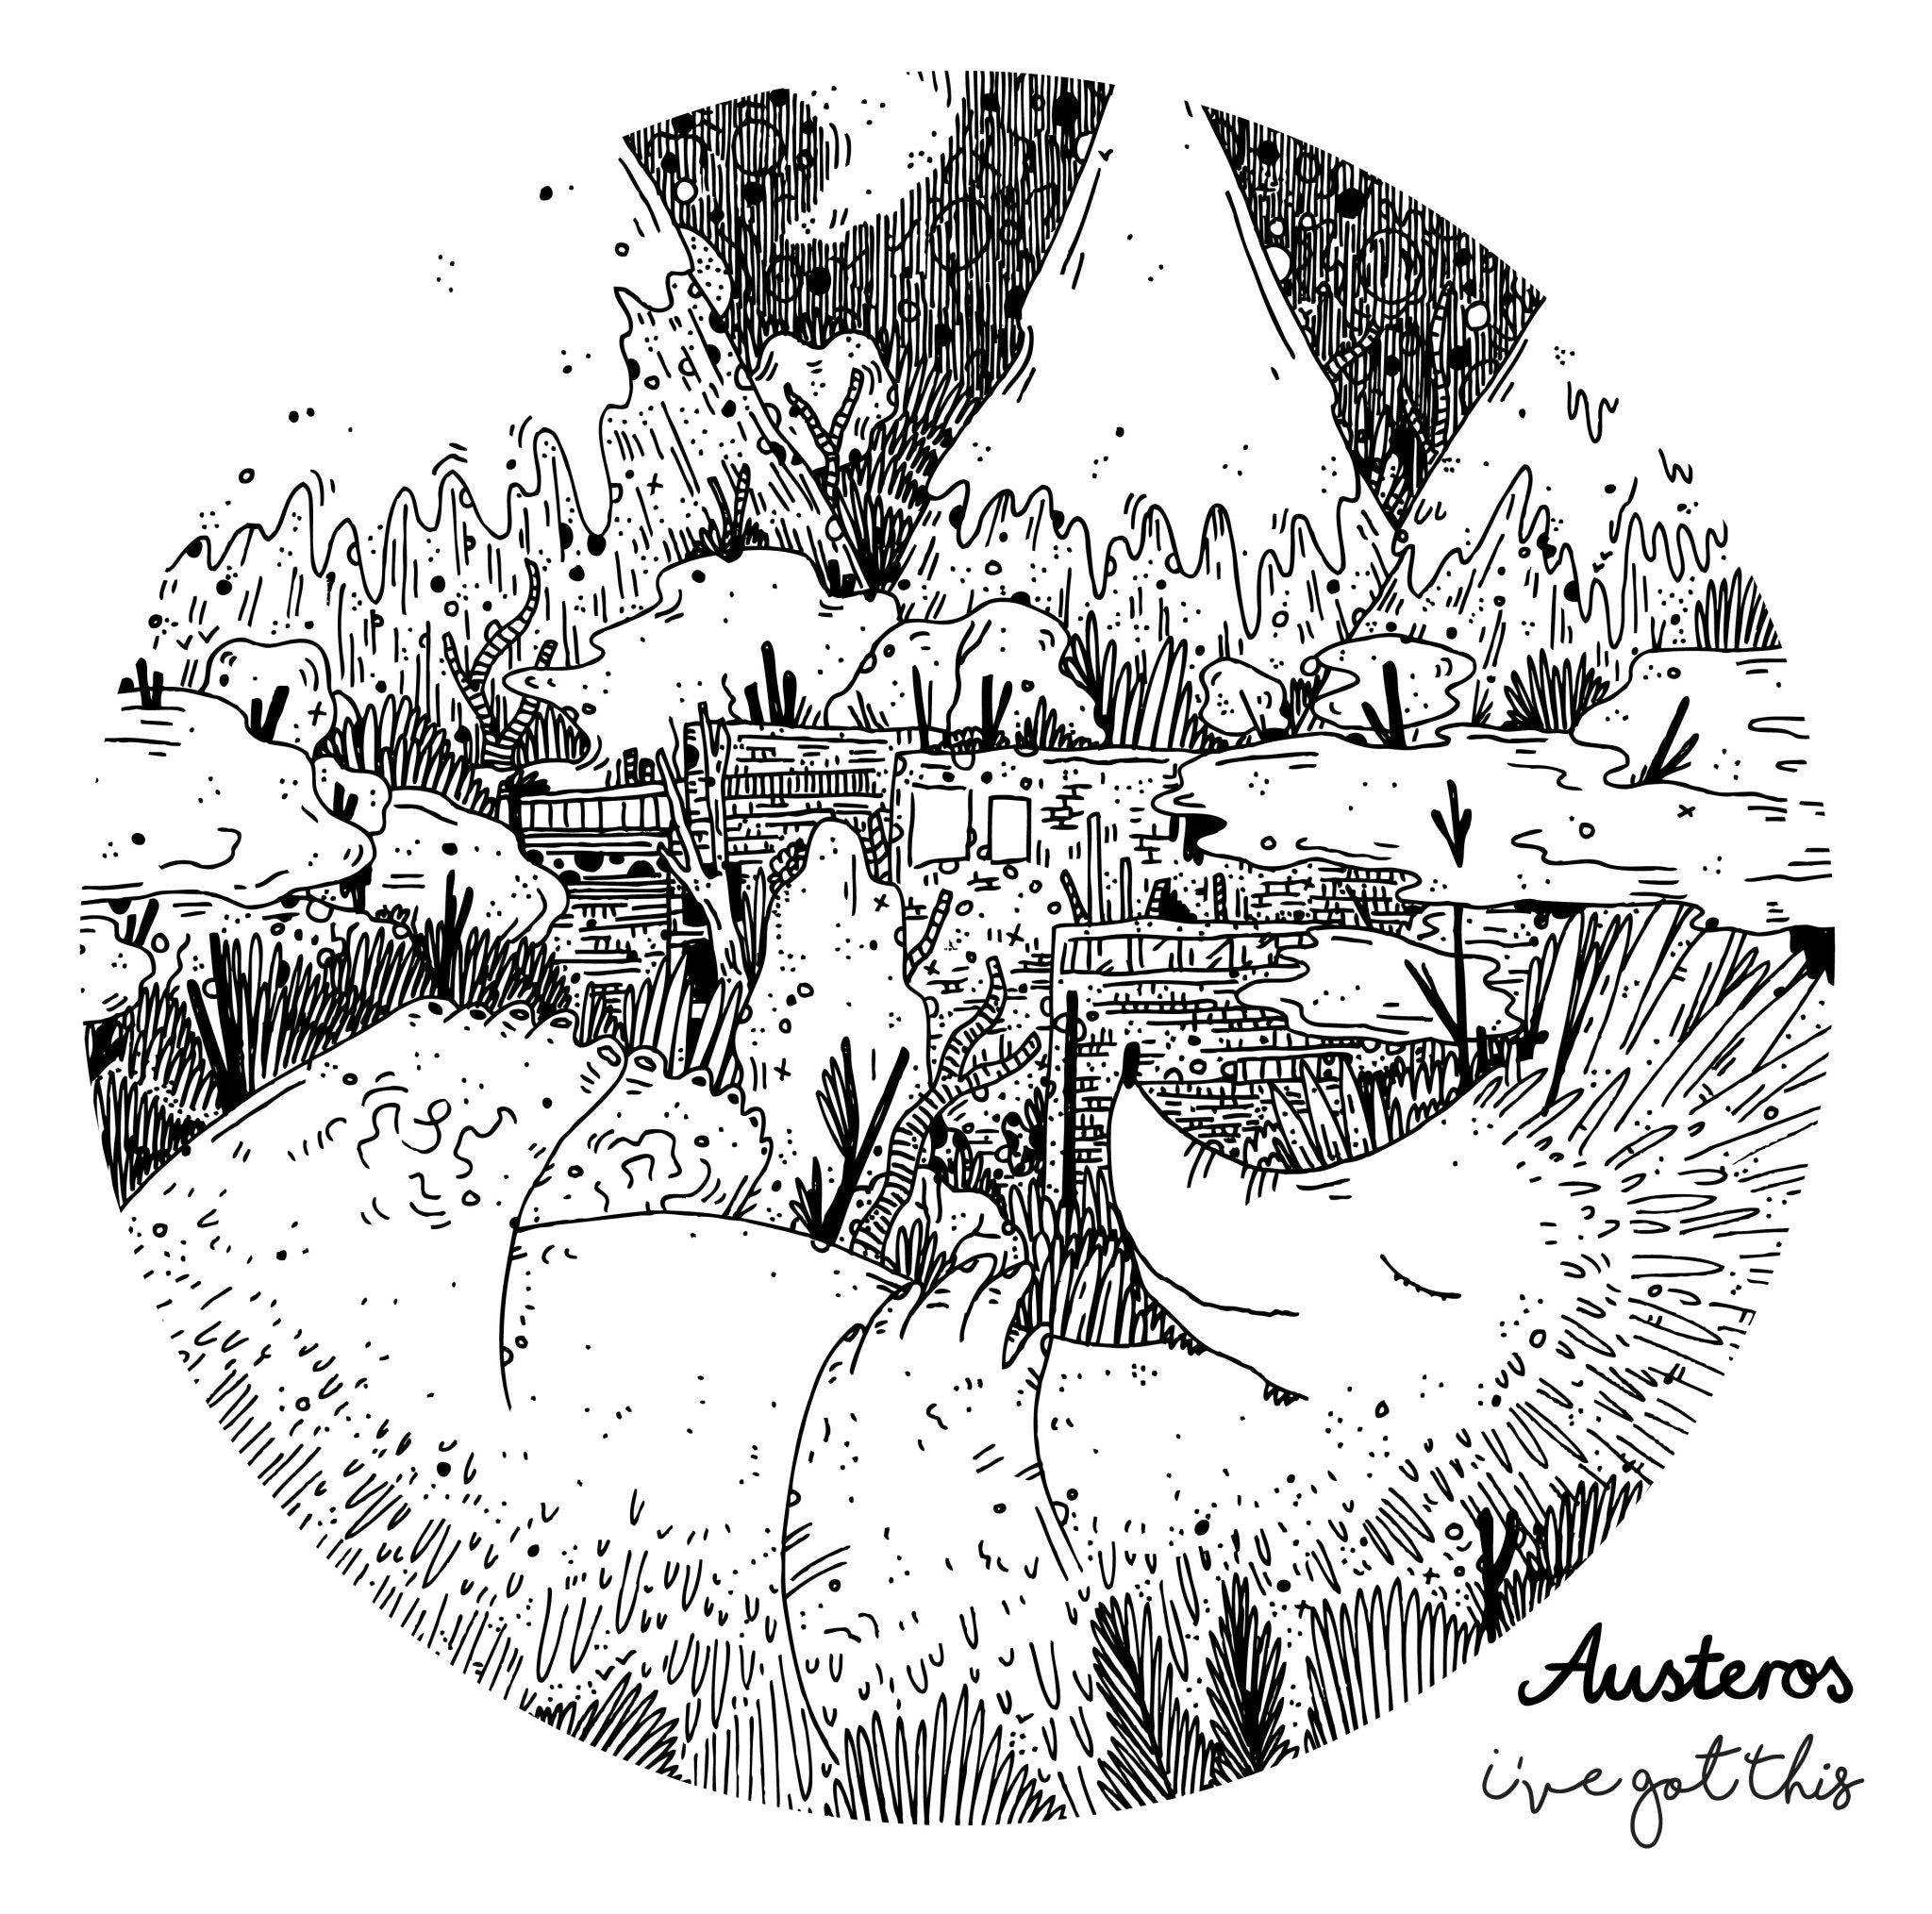 Austeros - I've Got This 12" - Vinyl - Specialist Subject Records